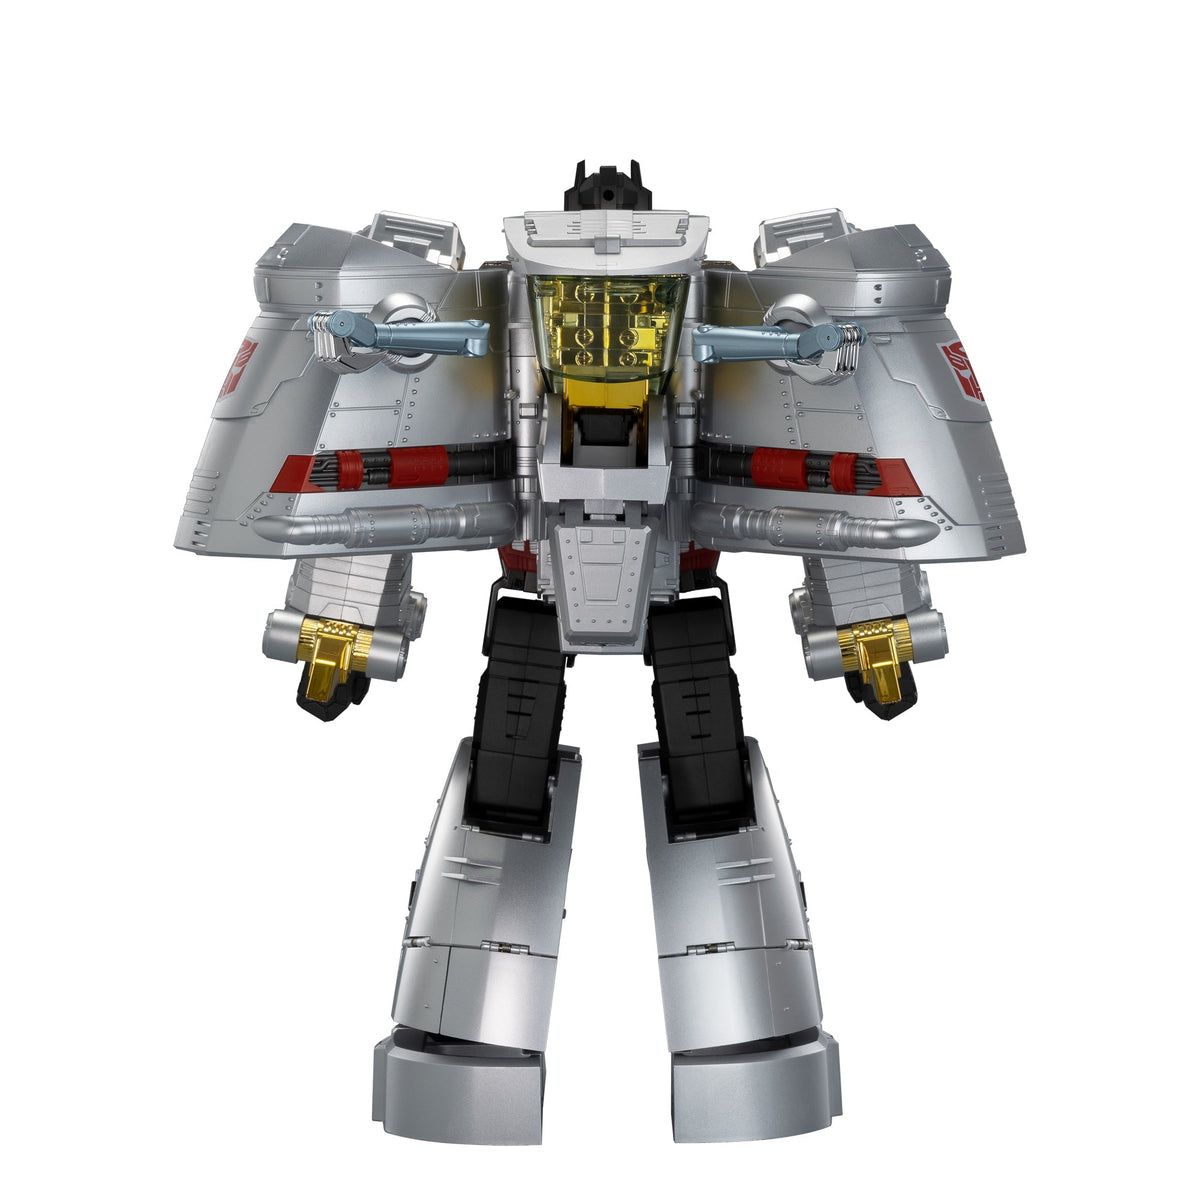 Transformers Grimlock Auto-Converting Robot - Flagship Collector's Edi –  Hasbro Pulse